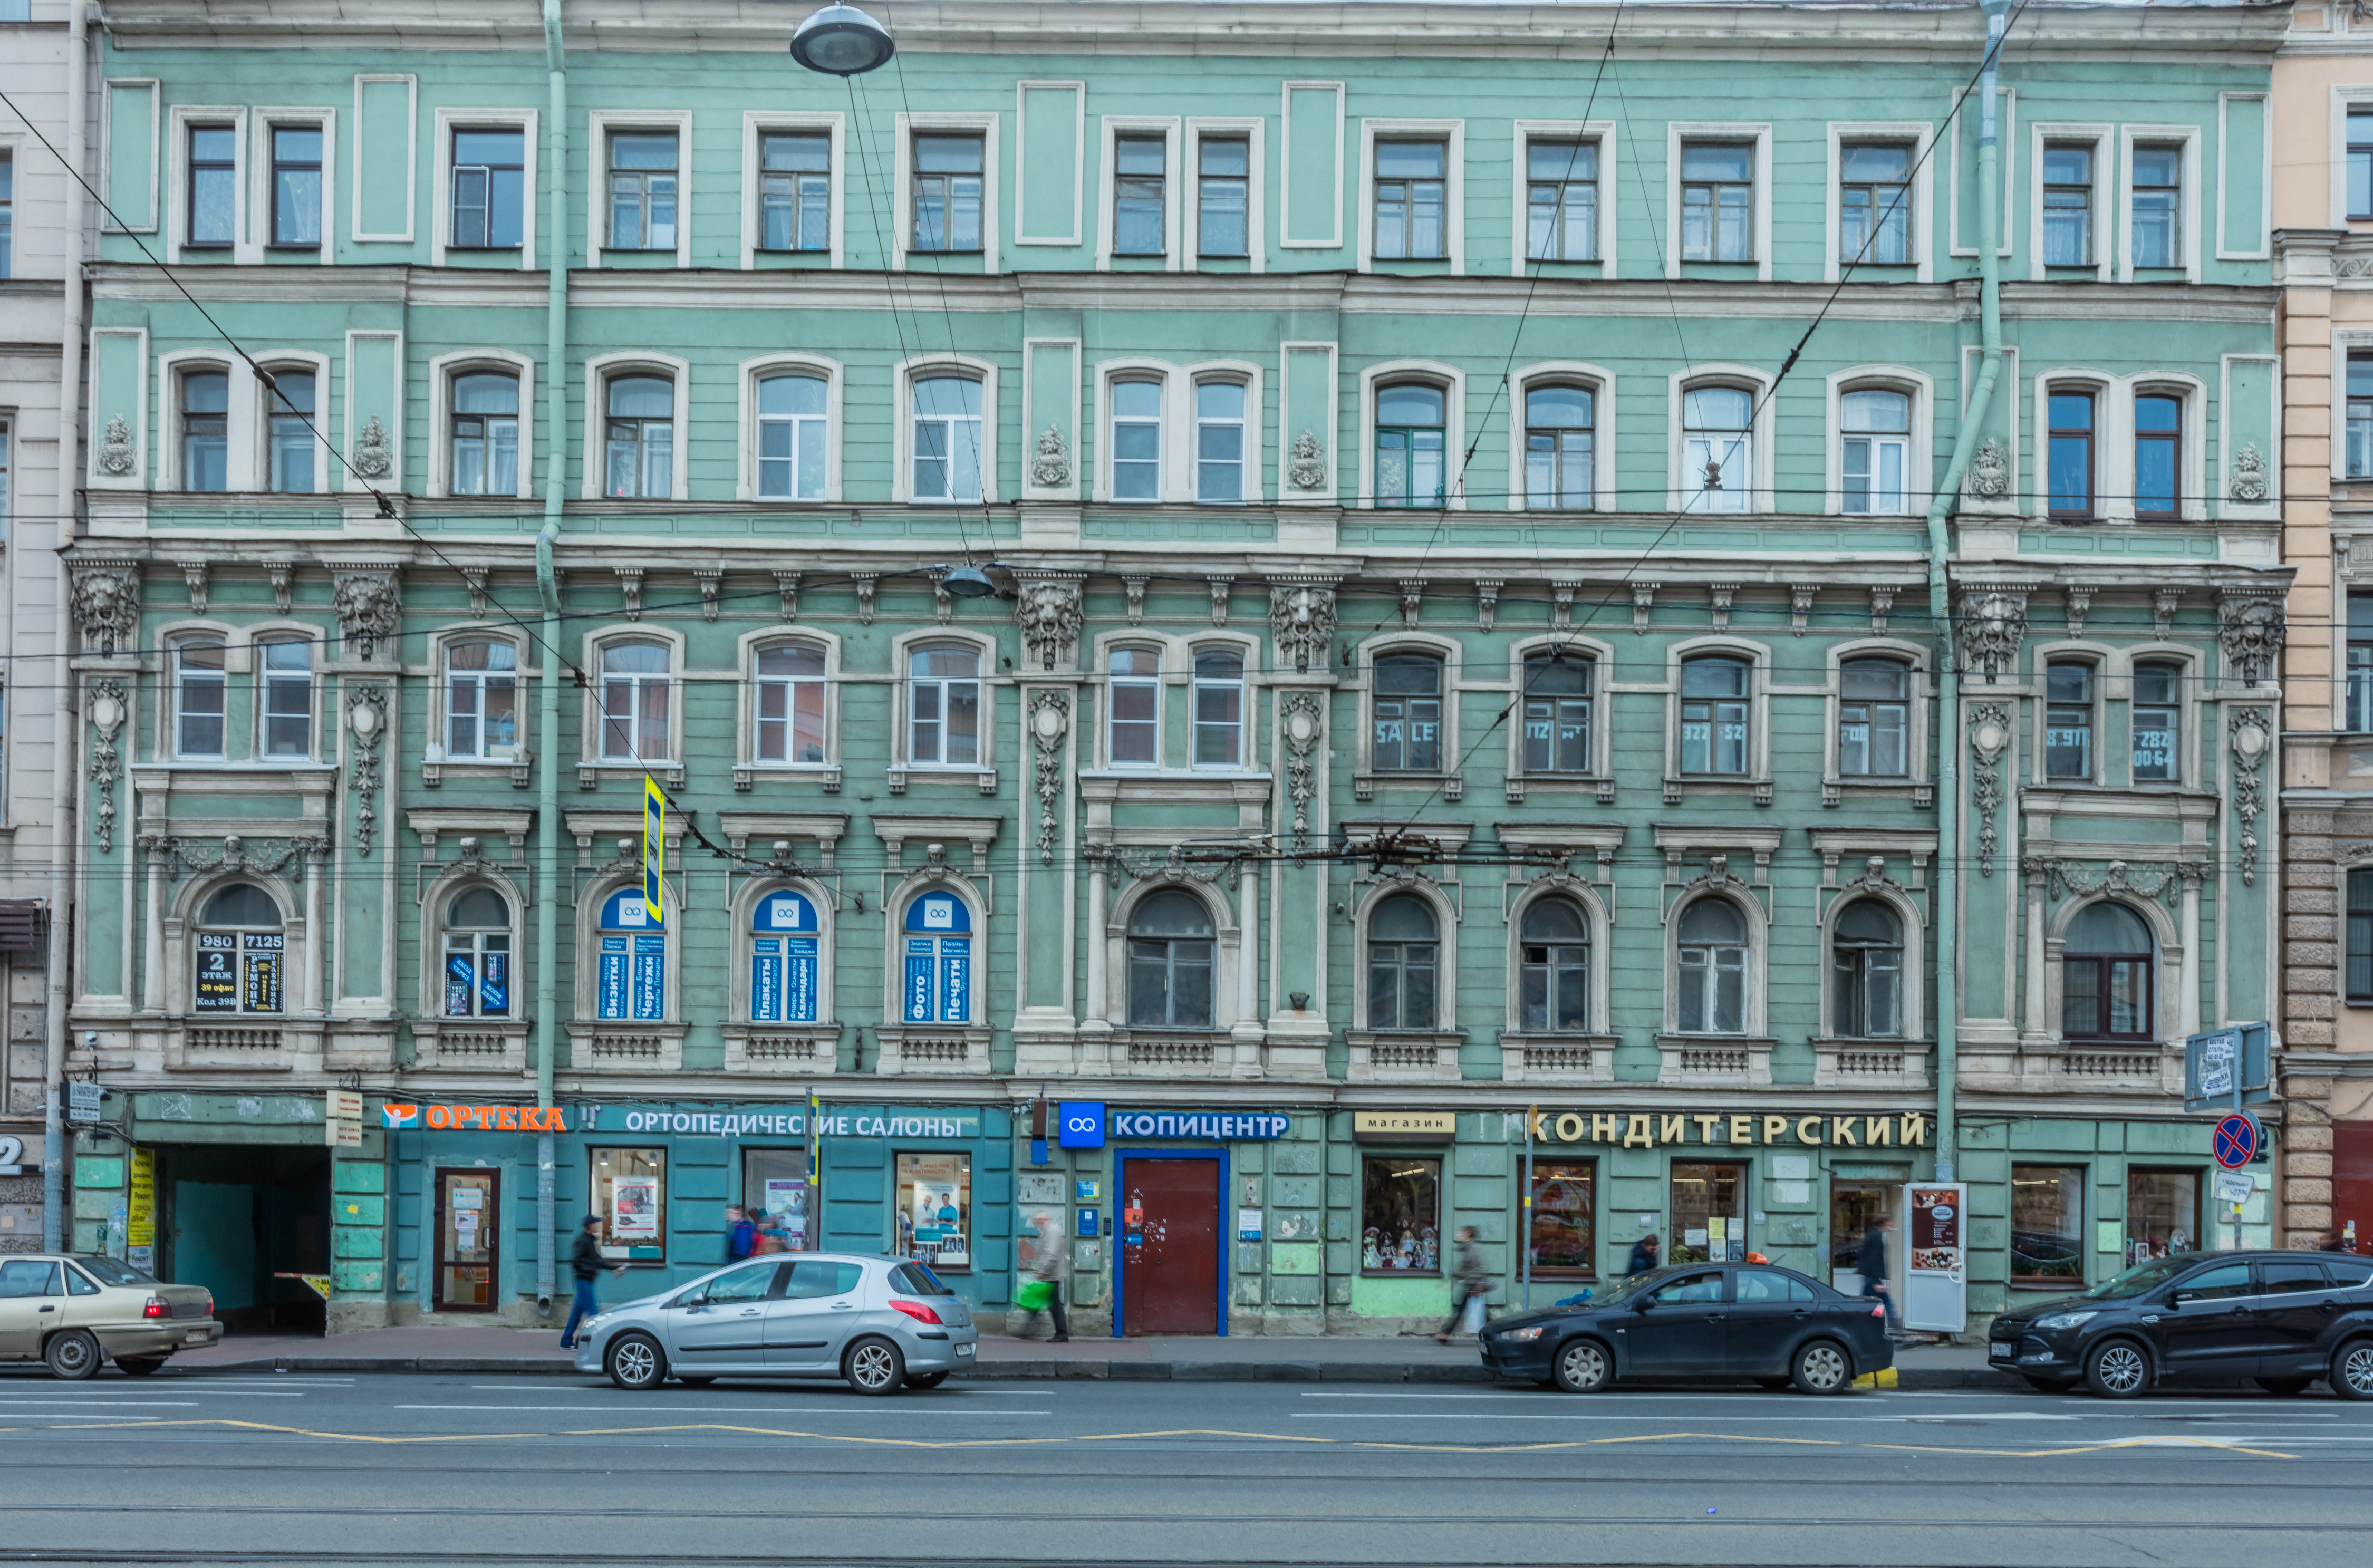 Однокомнатная квартира на ул. 1-я Красноармейская 2 (37кв.м) до 4 гостей